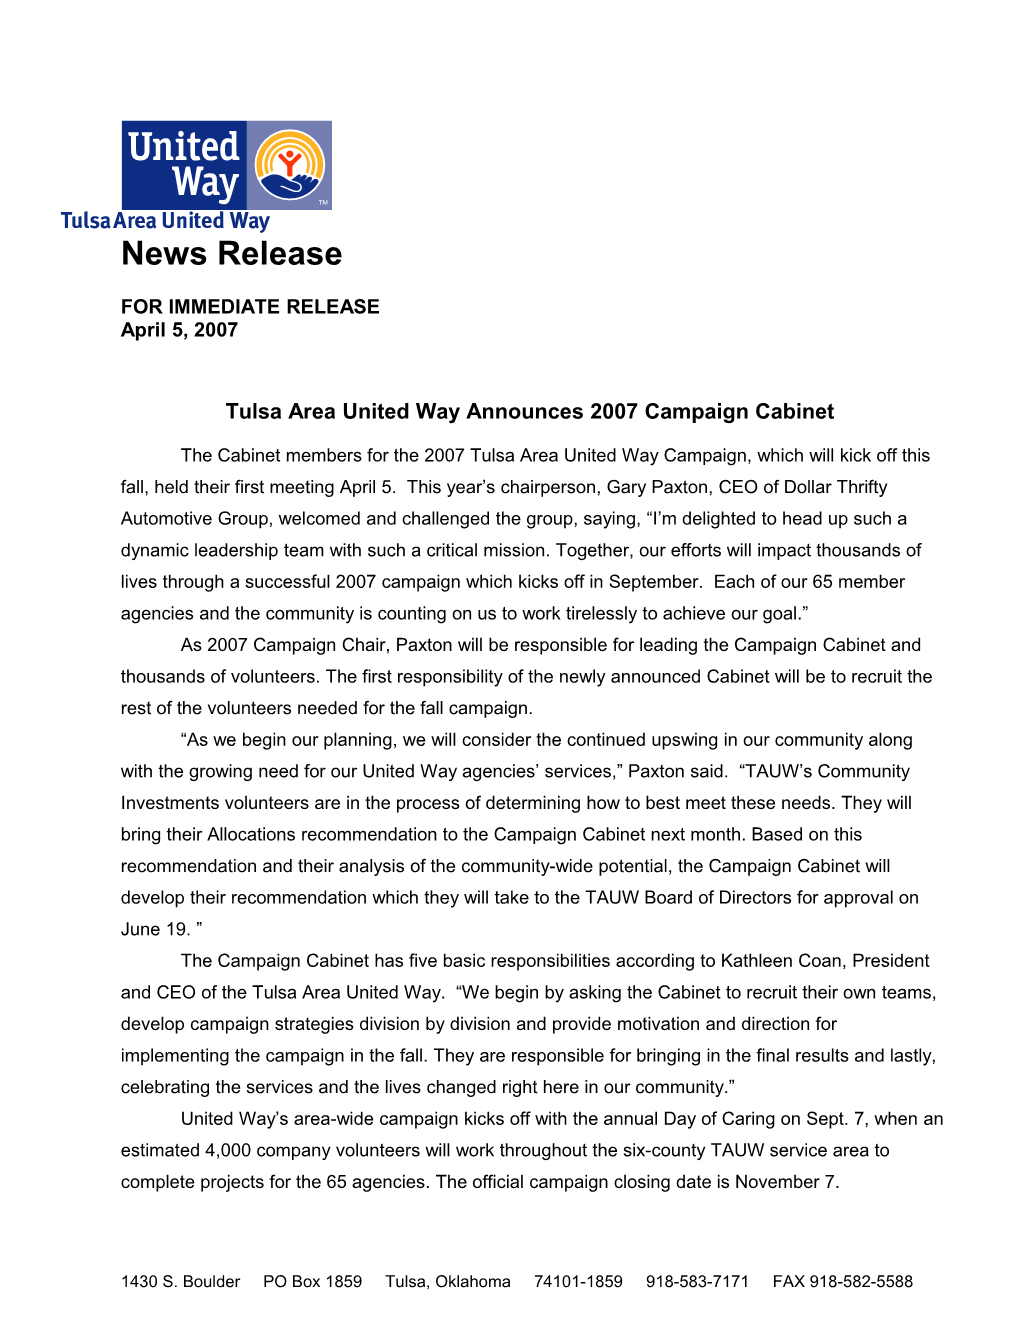 Tulsa Area United Way Announces 2007 Campaign Cabinet